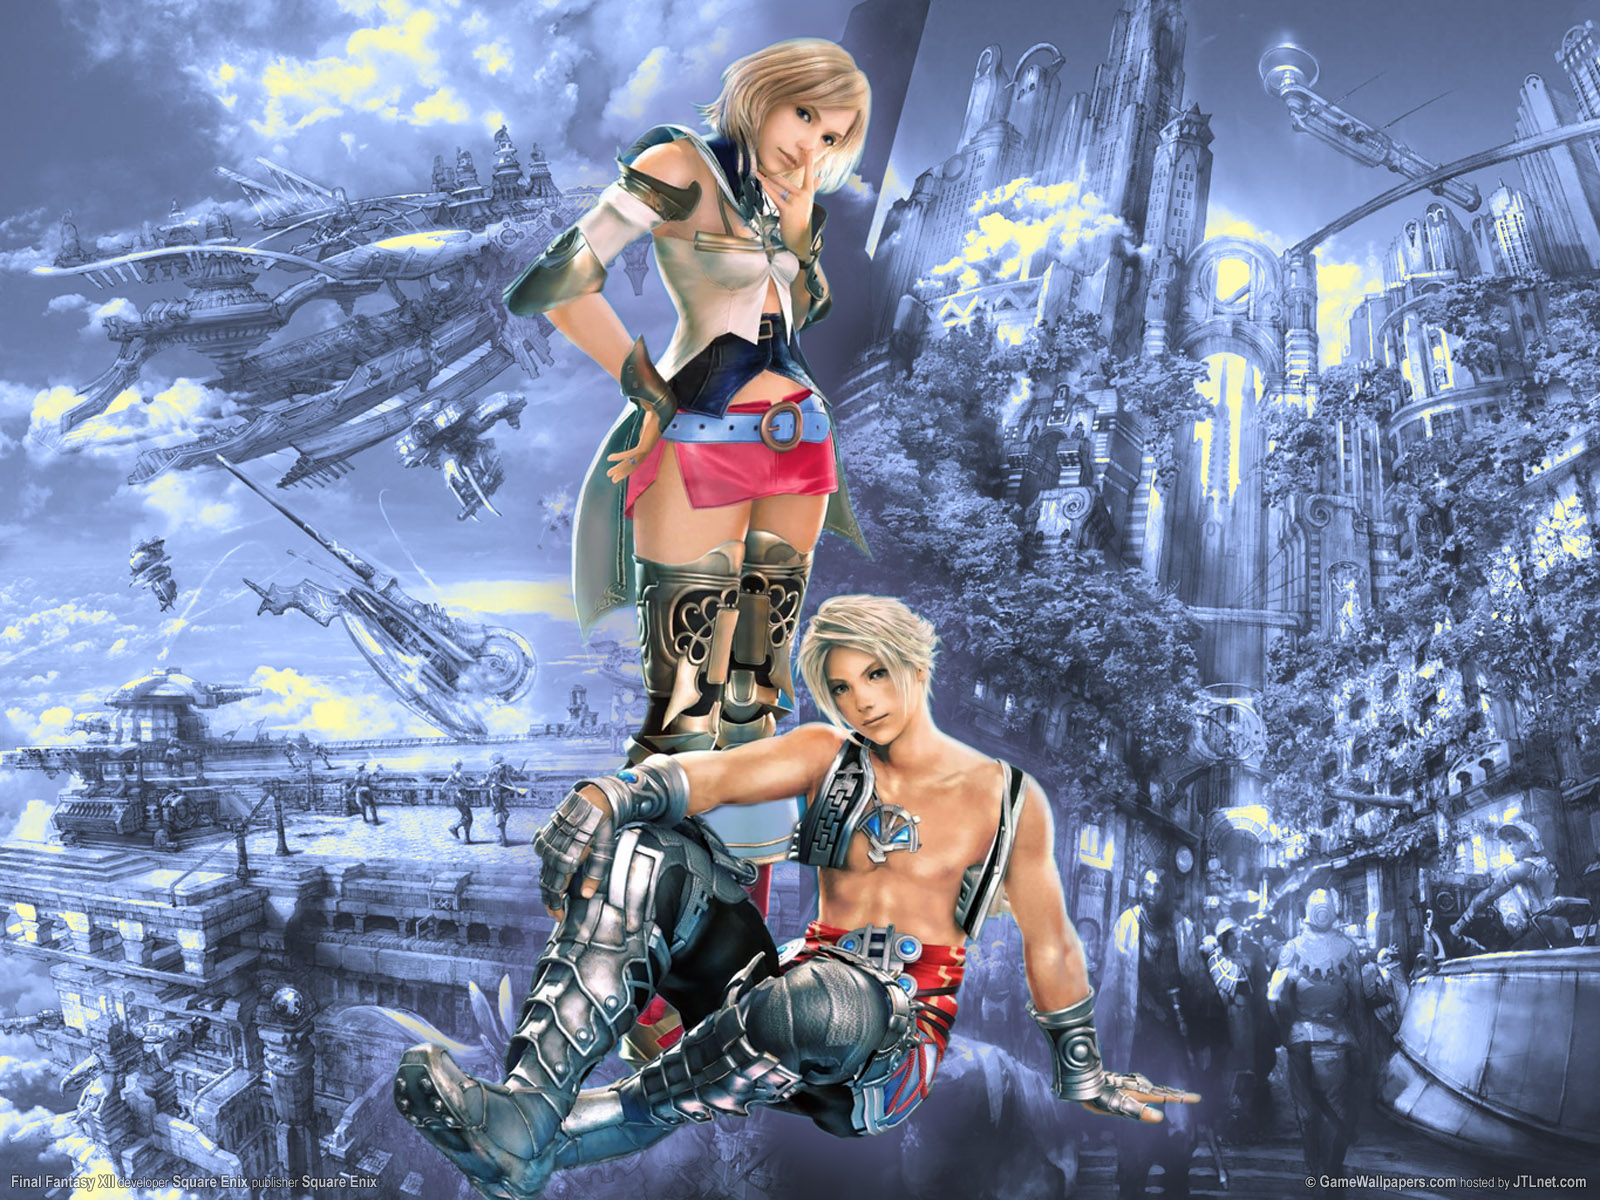 Free PSP Themes Wallpaper: Final Fantasy wallpaper - Final Fantasy: A ...